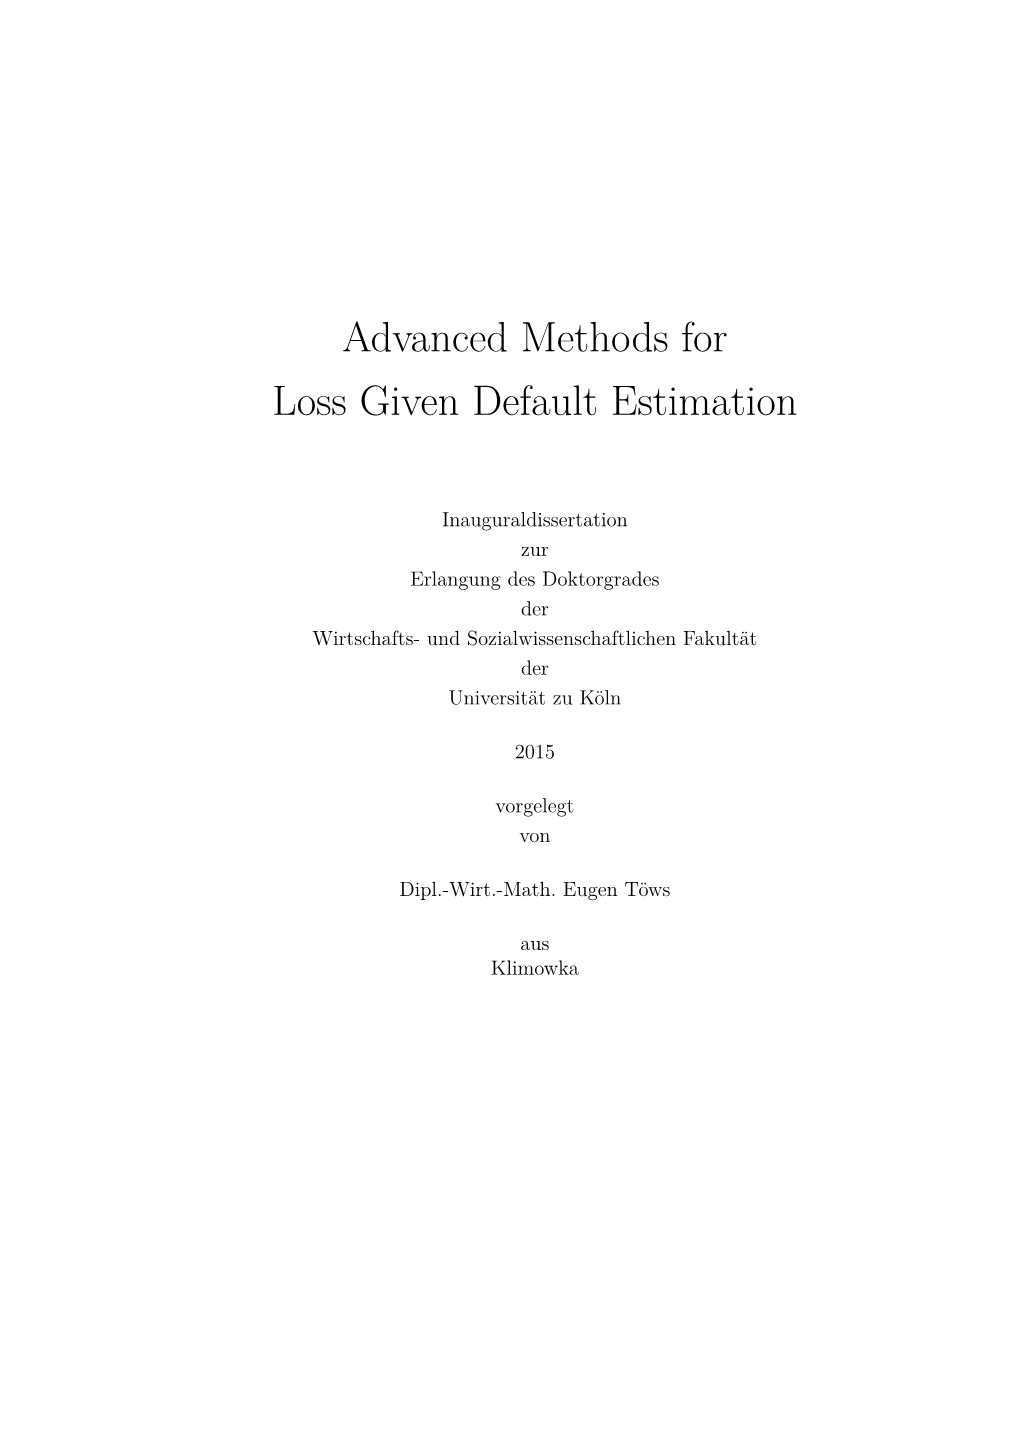 Advanced Methods for Loss Given Default Estimation